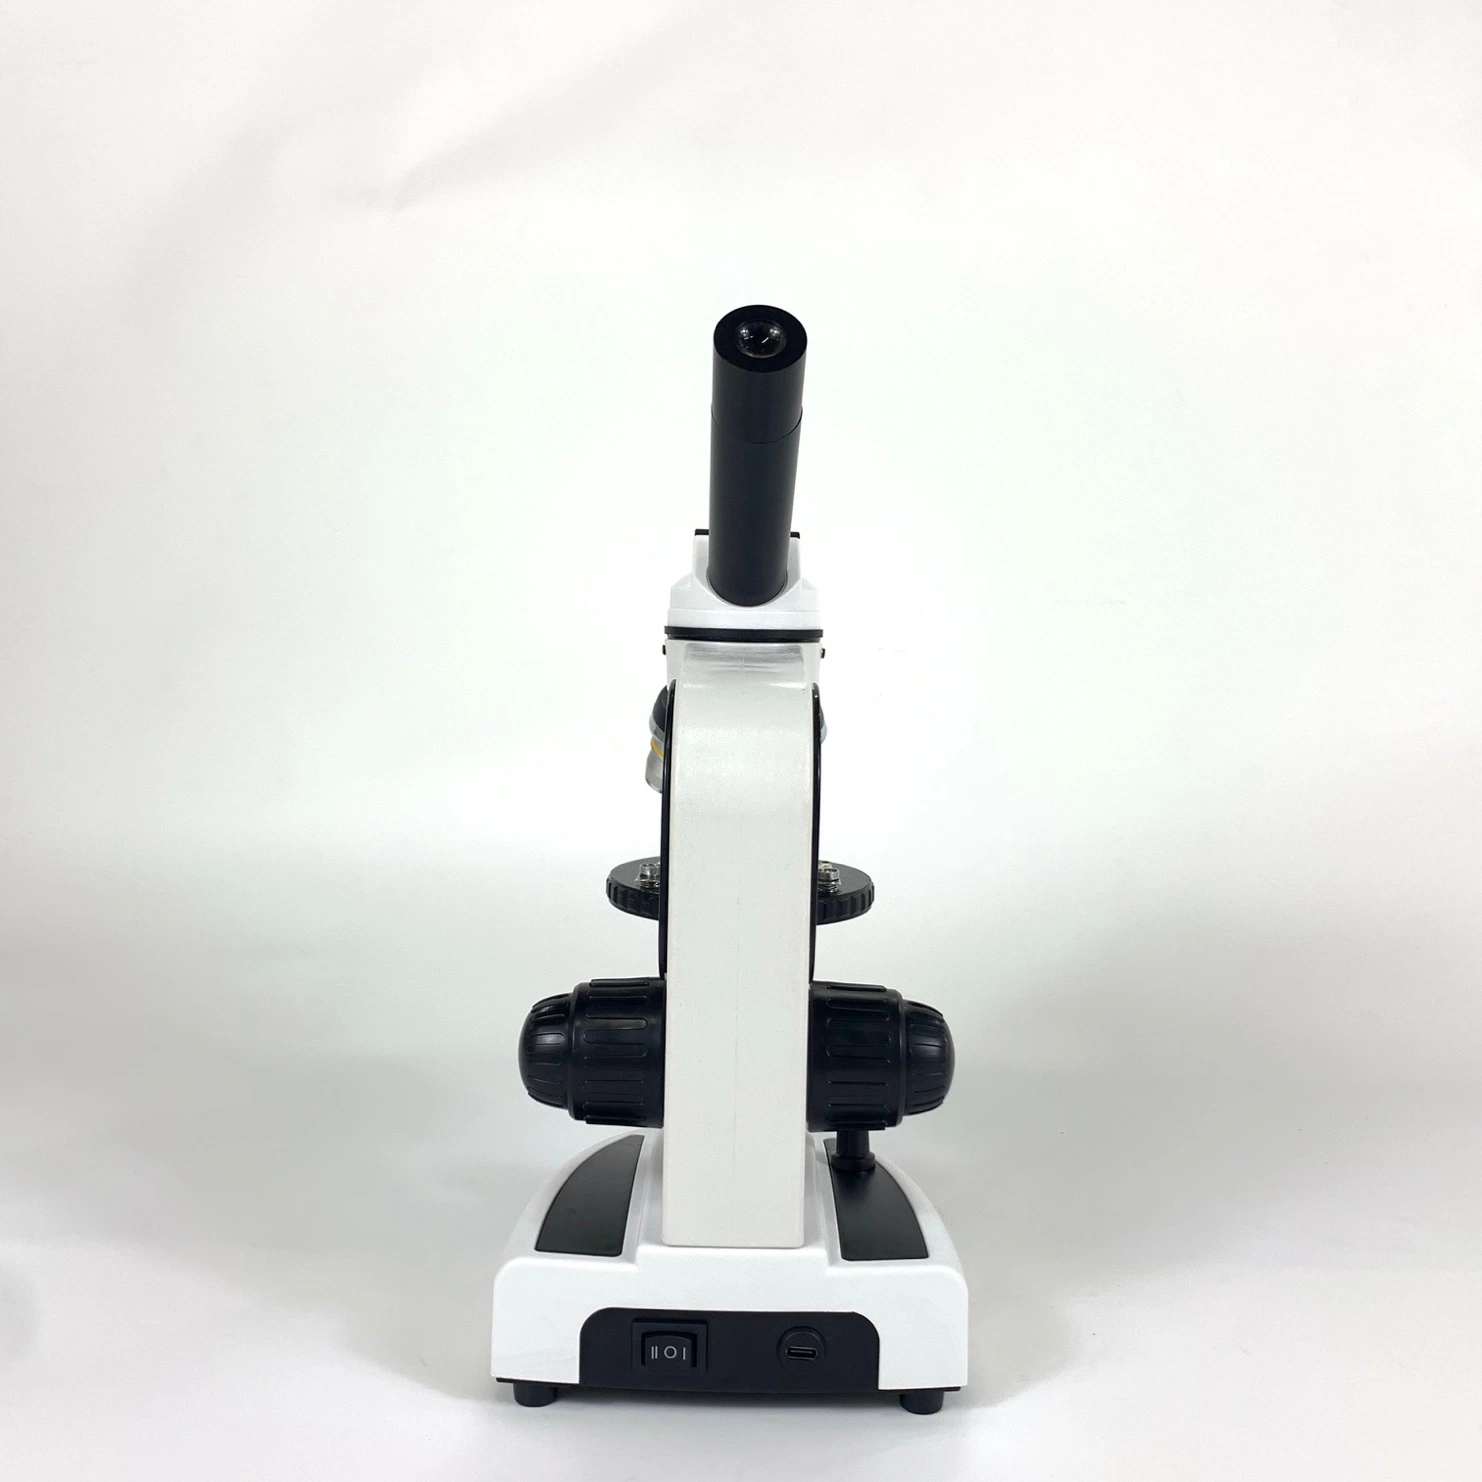 China Manufacturer of Monocular Head Microscope (XSP-117D)